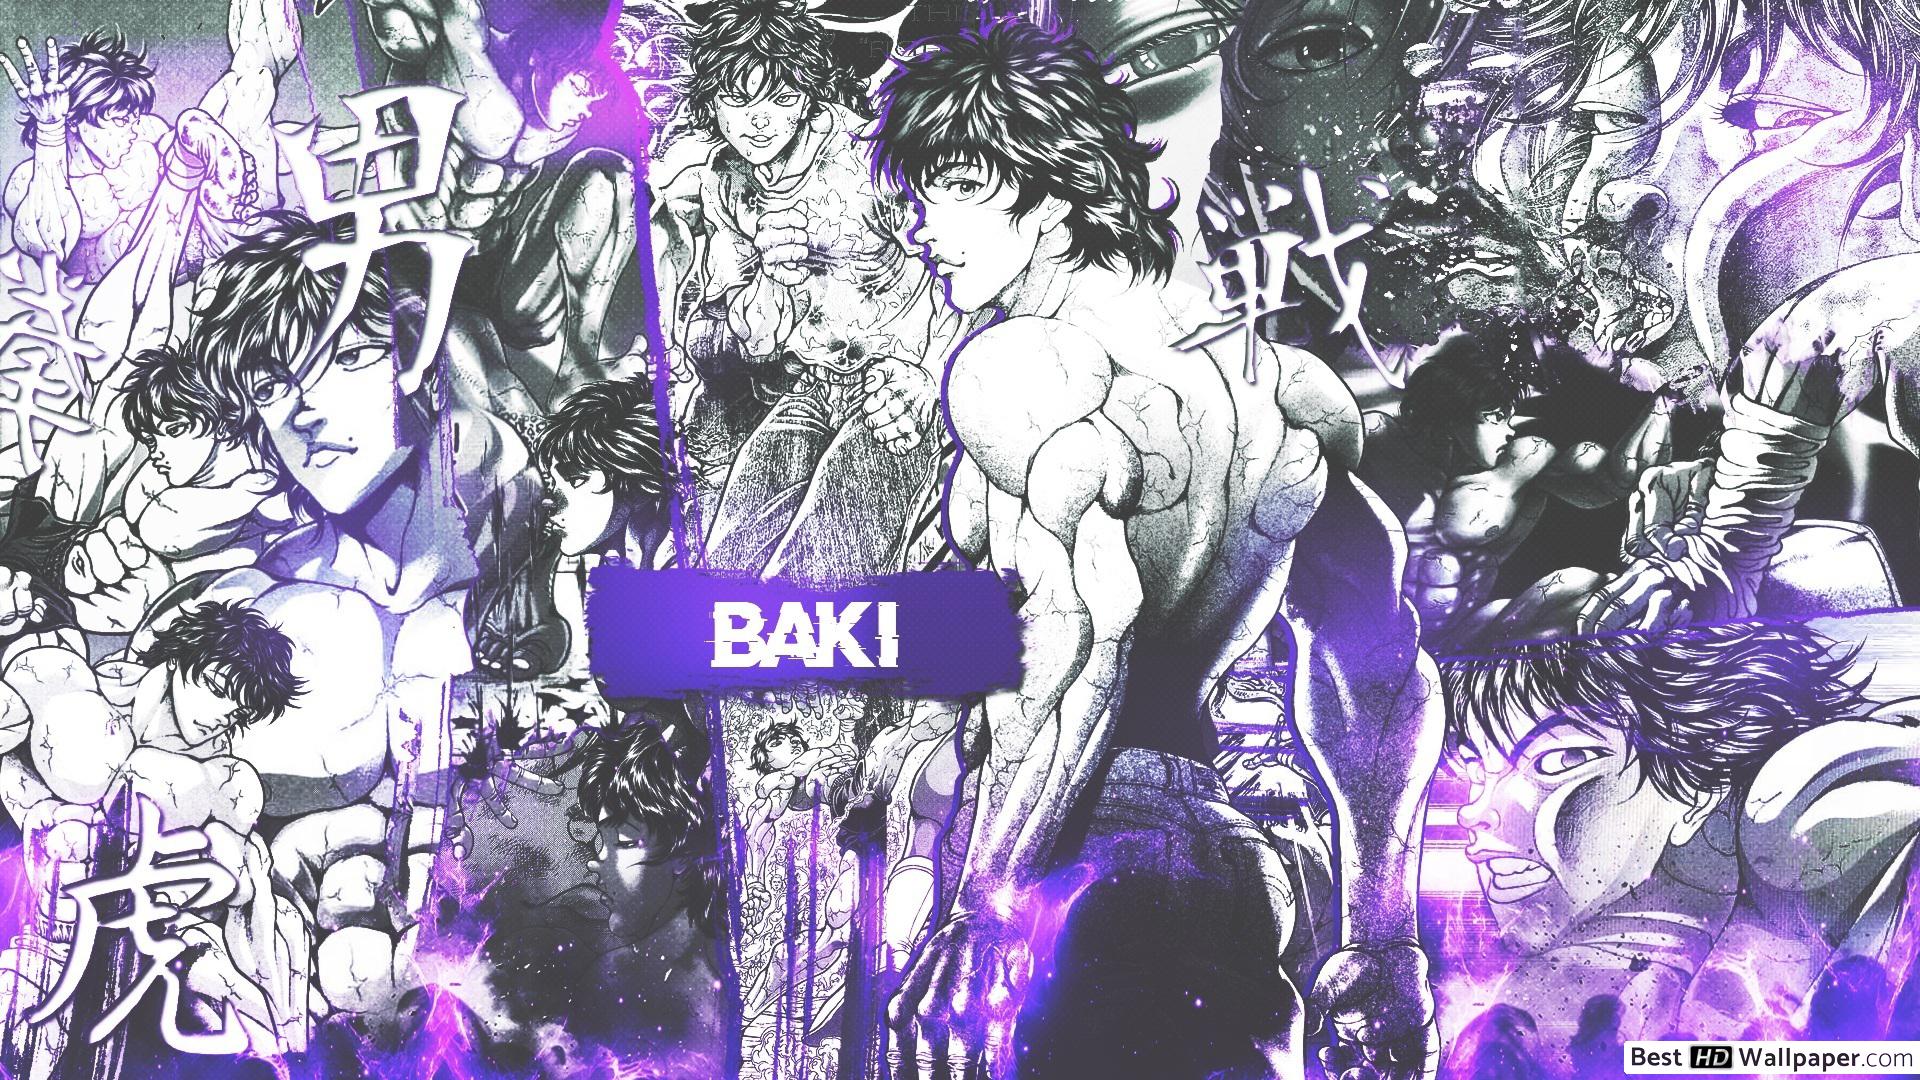 Baki 2018 HD wallpaper download